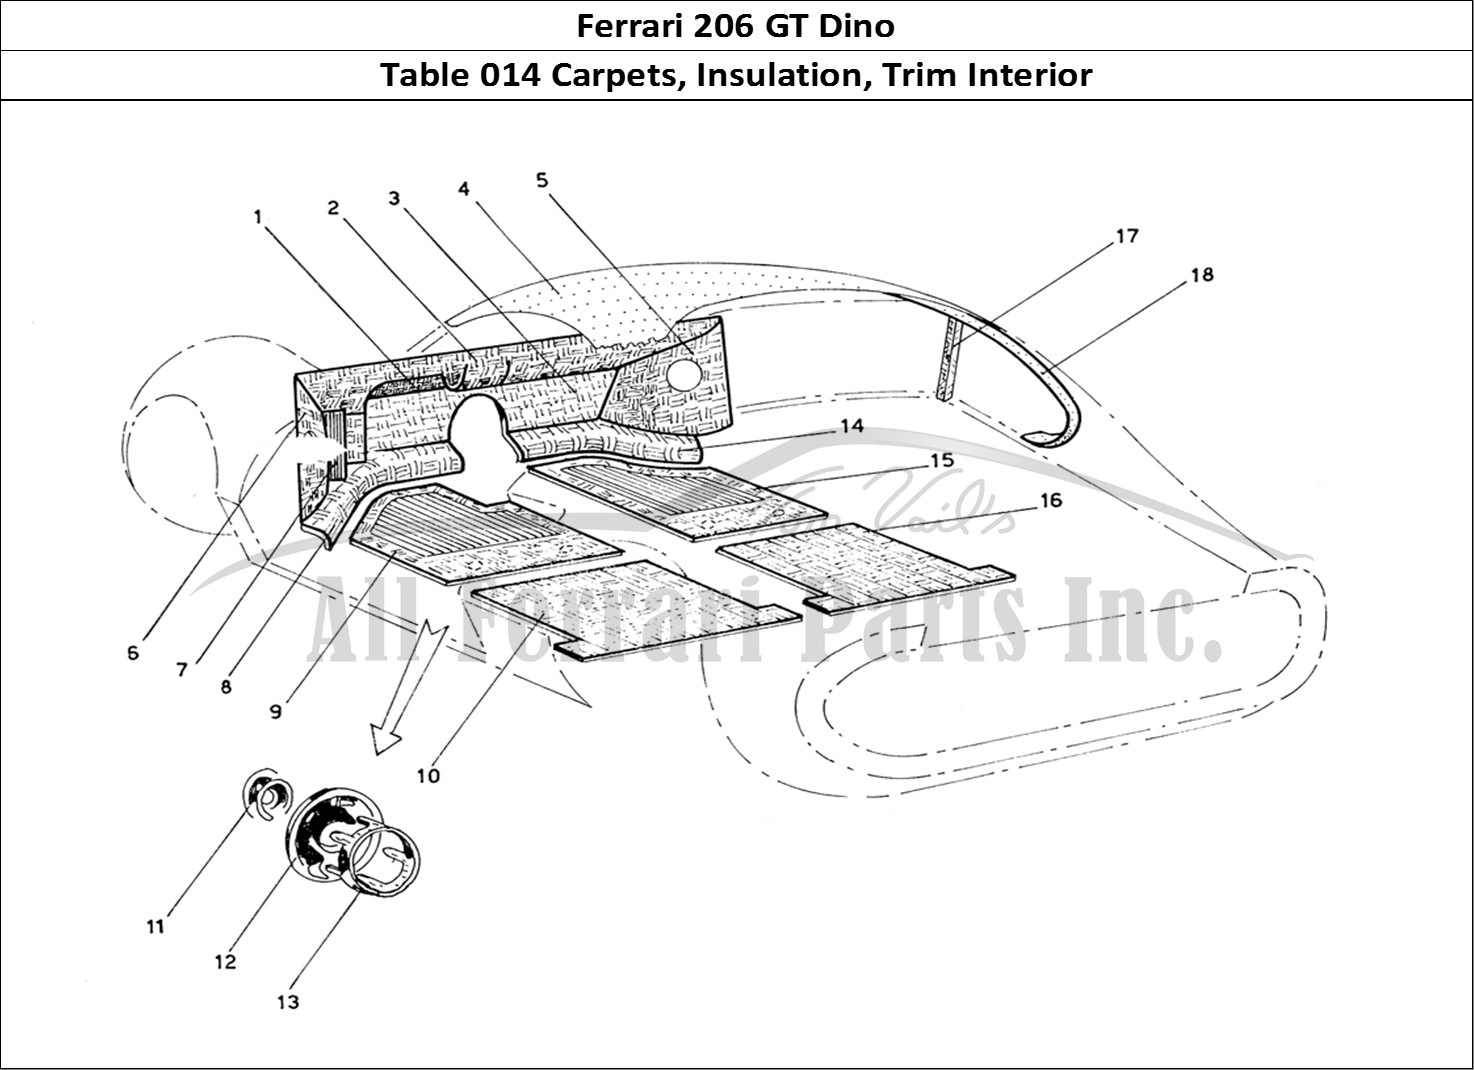 Ferrari Parts Ferrari 206 GT Dino (Coachwork) Page 014 Cabin Carpets